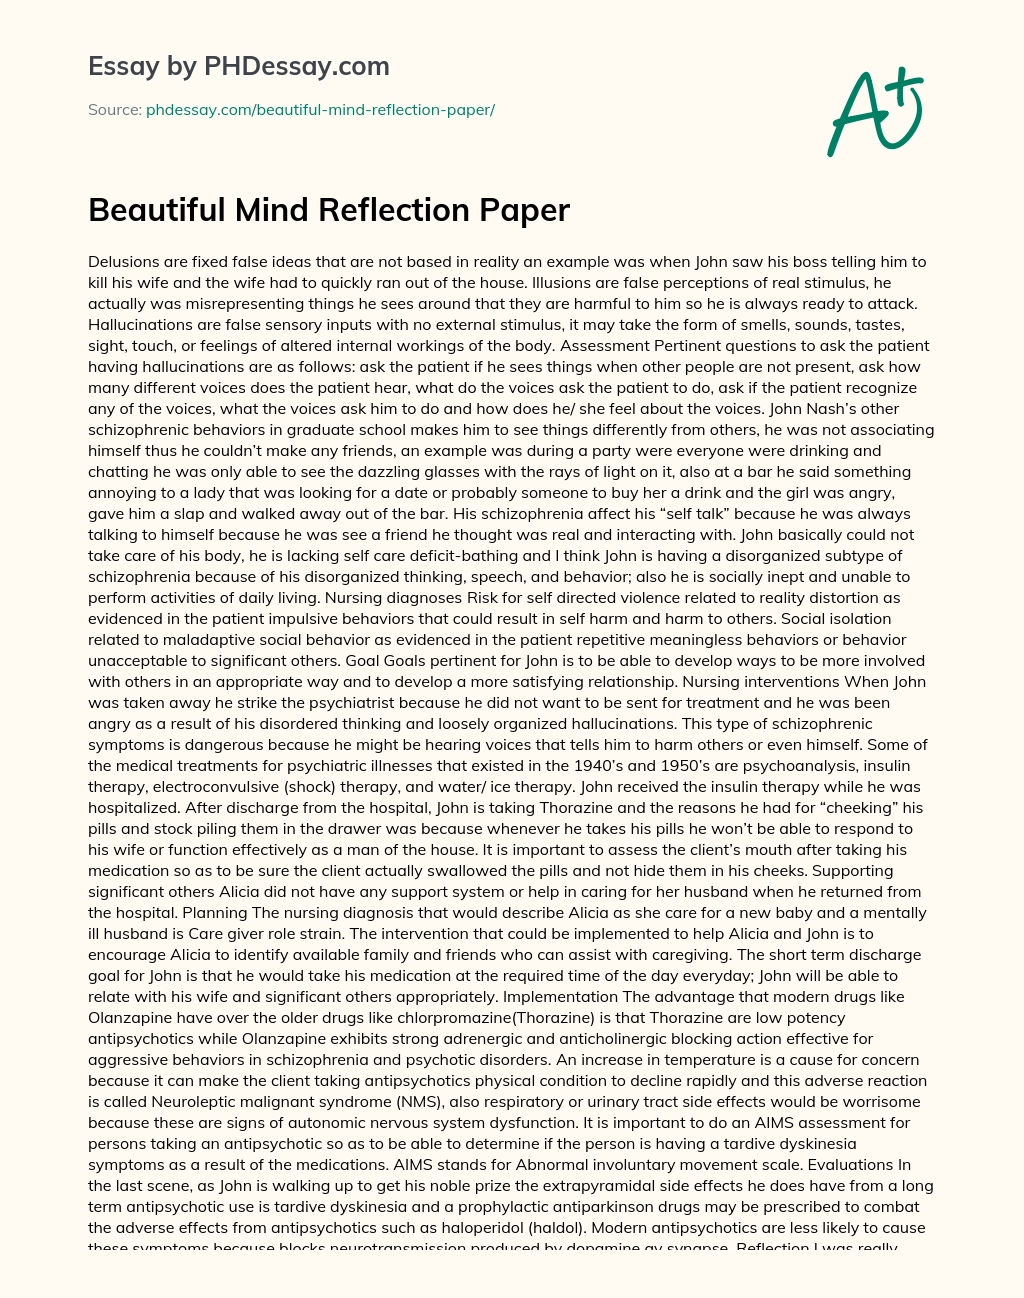 Beautiful Mind Reflection Paper essay